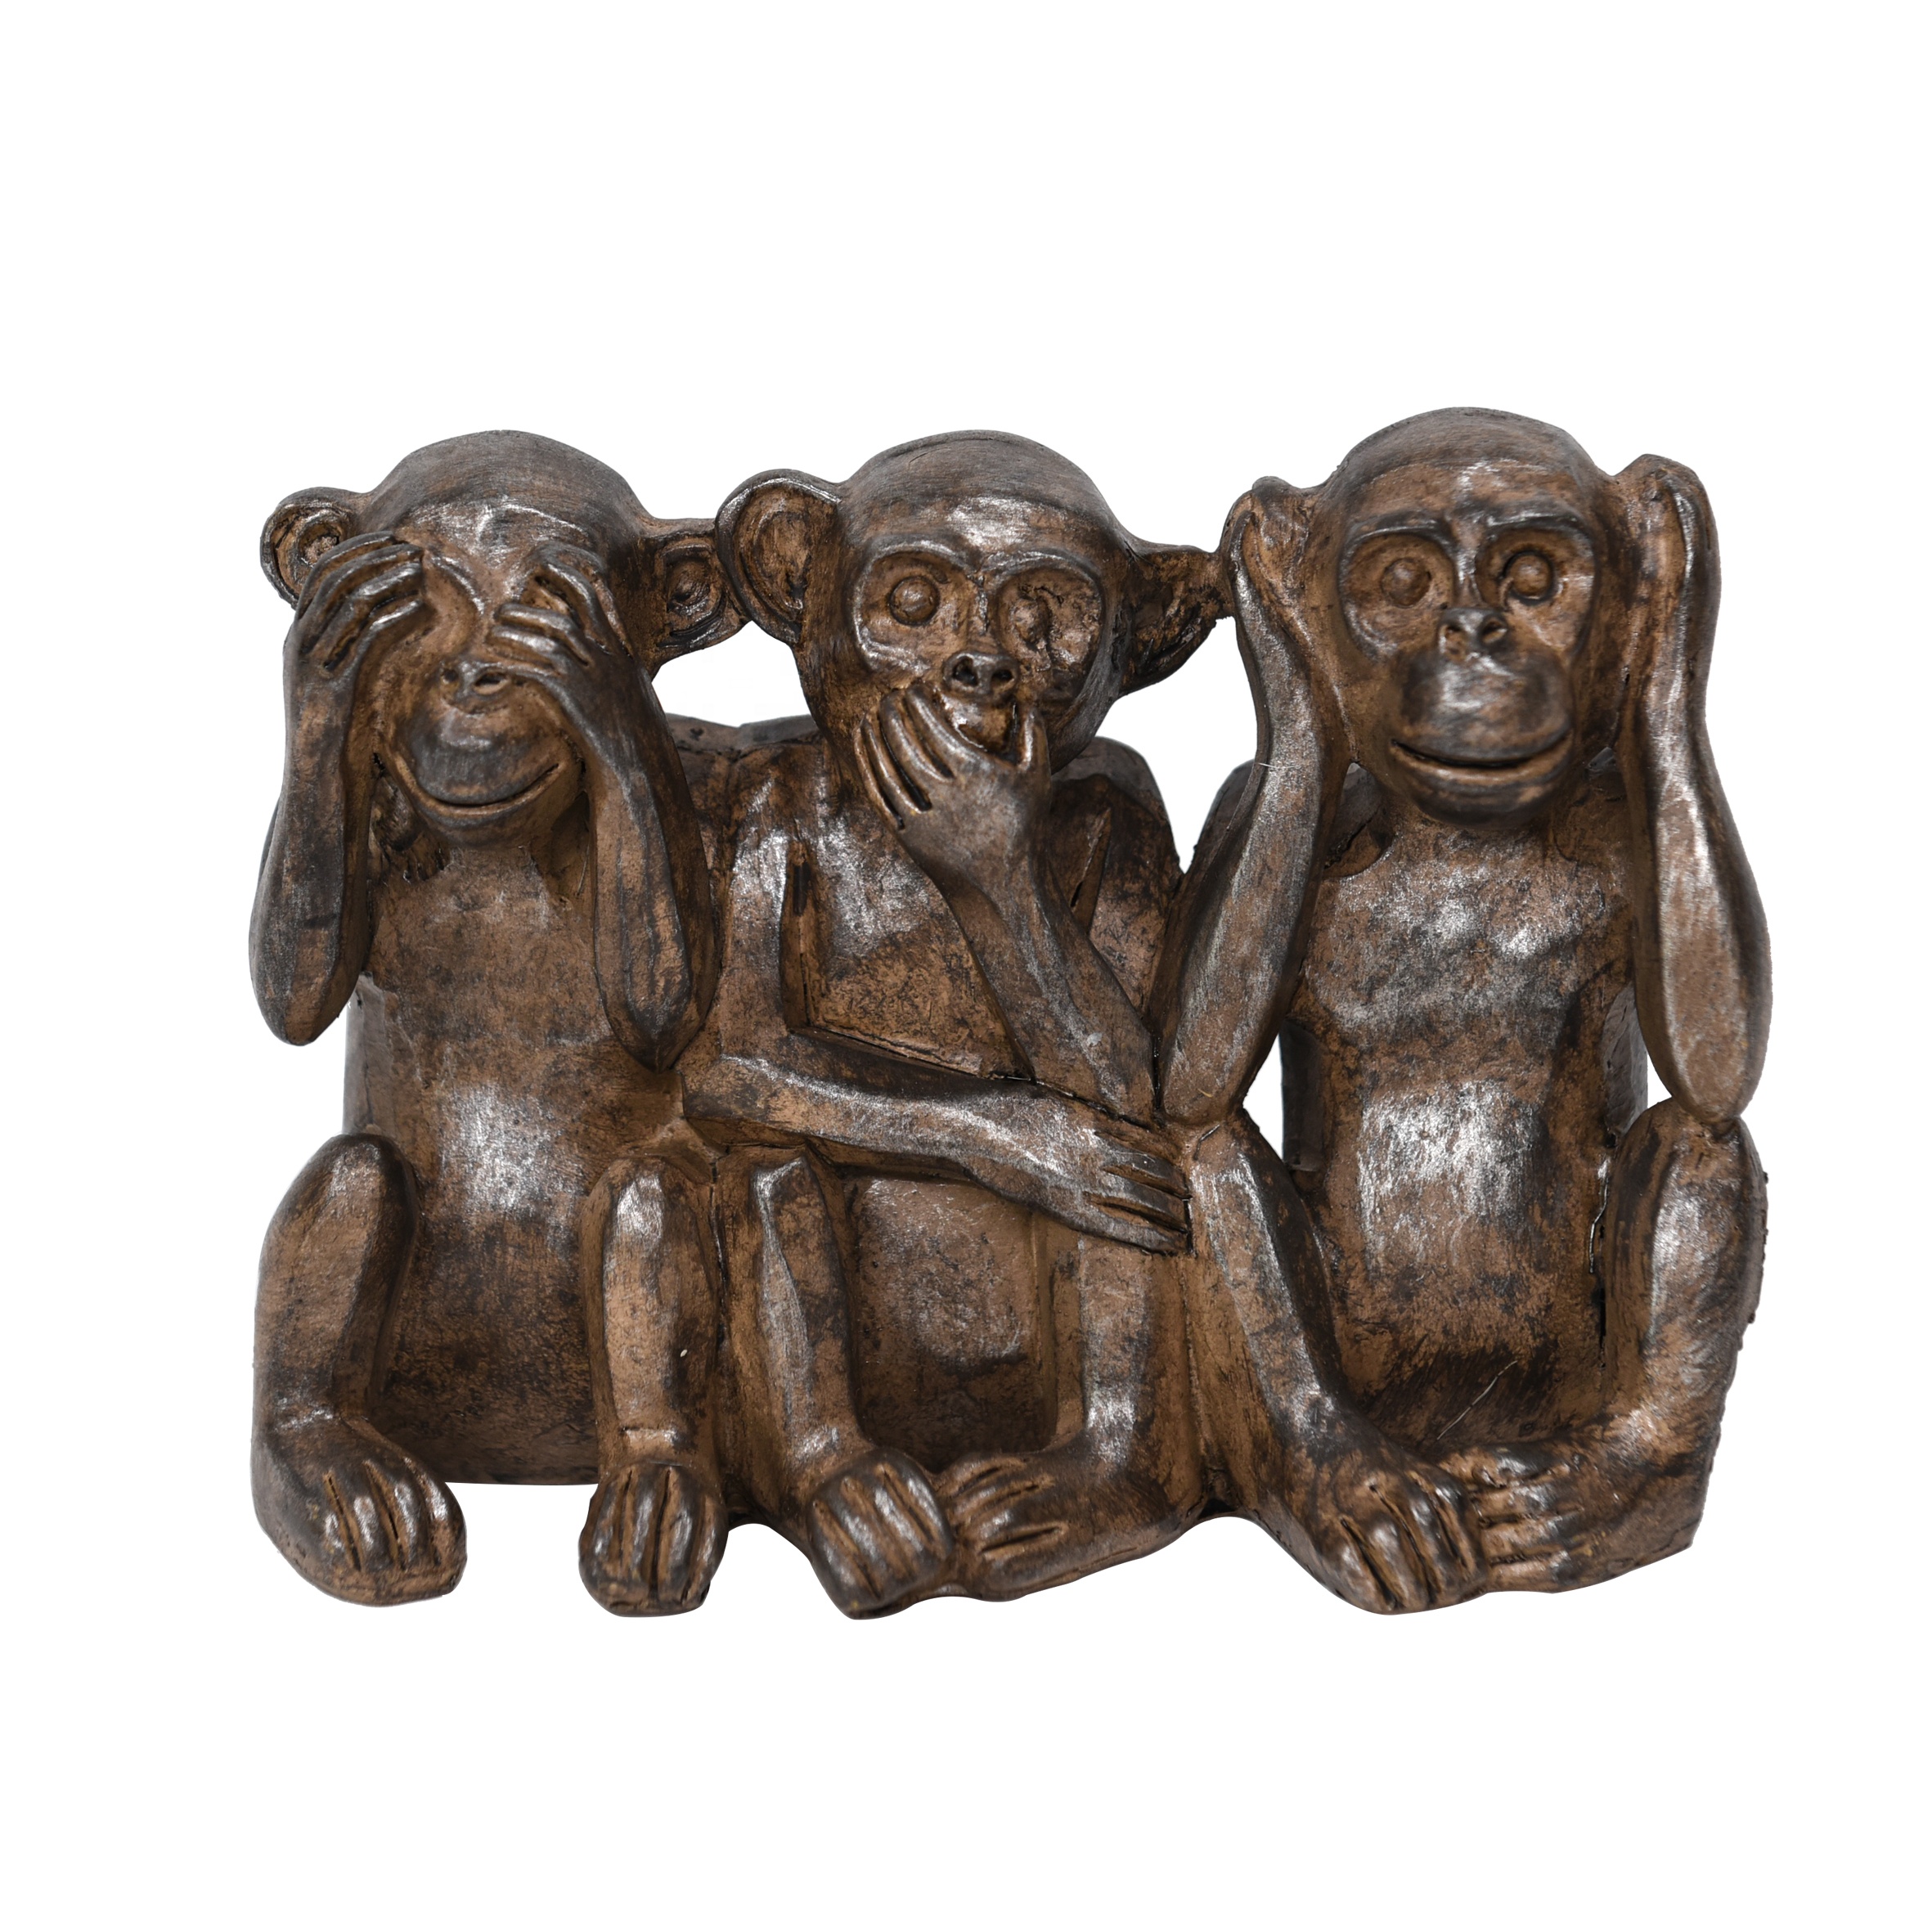 Resin See Hear Speak No Evil Monkey Figurines Home Decorative